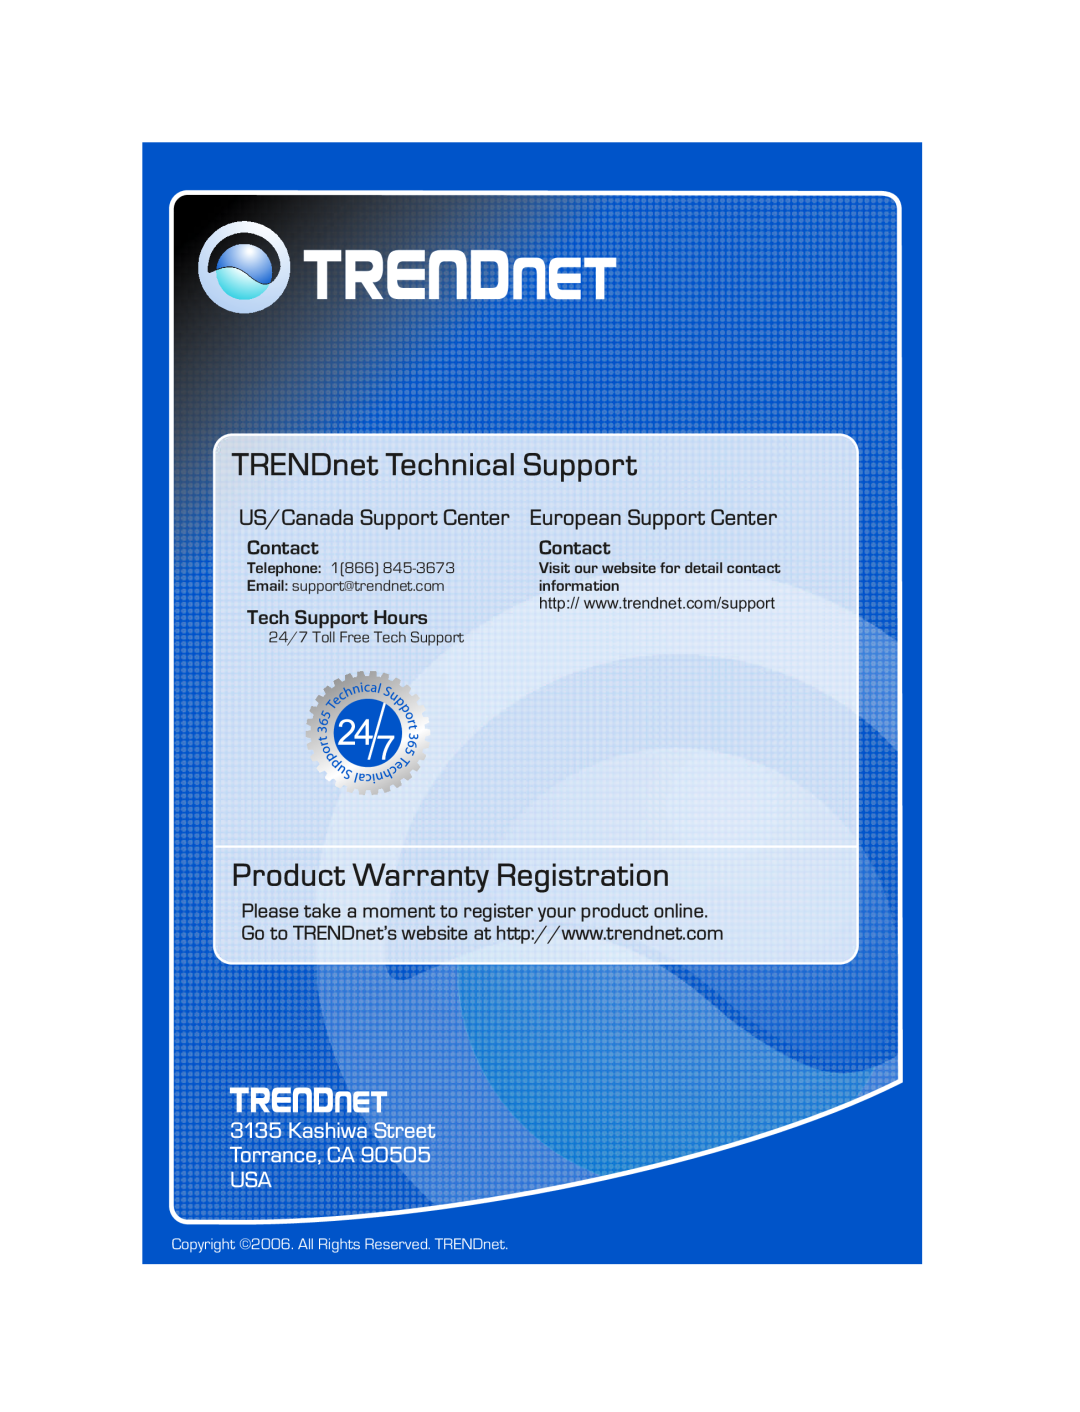 TRENDnet TE100-P1U TRENDnet Technical Support, Product Warranty Registration, Kashiwa Street Torrance, CA USA, Contact 